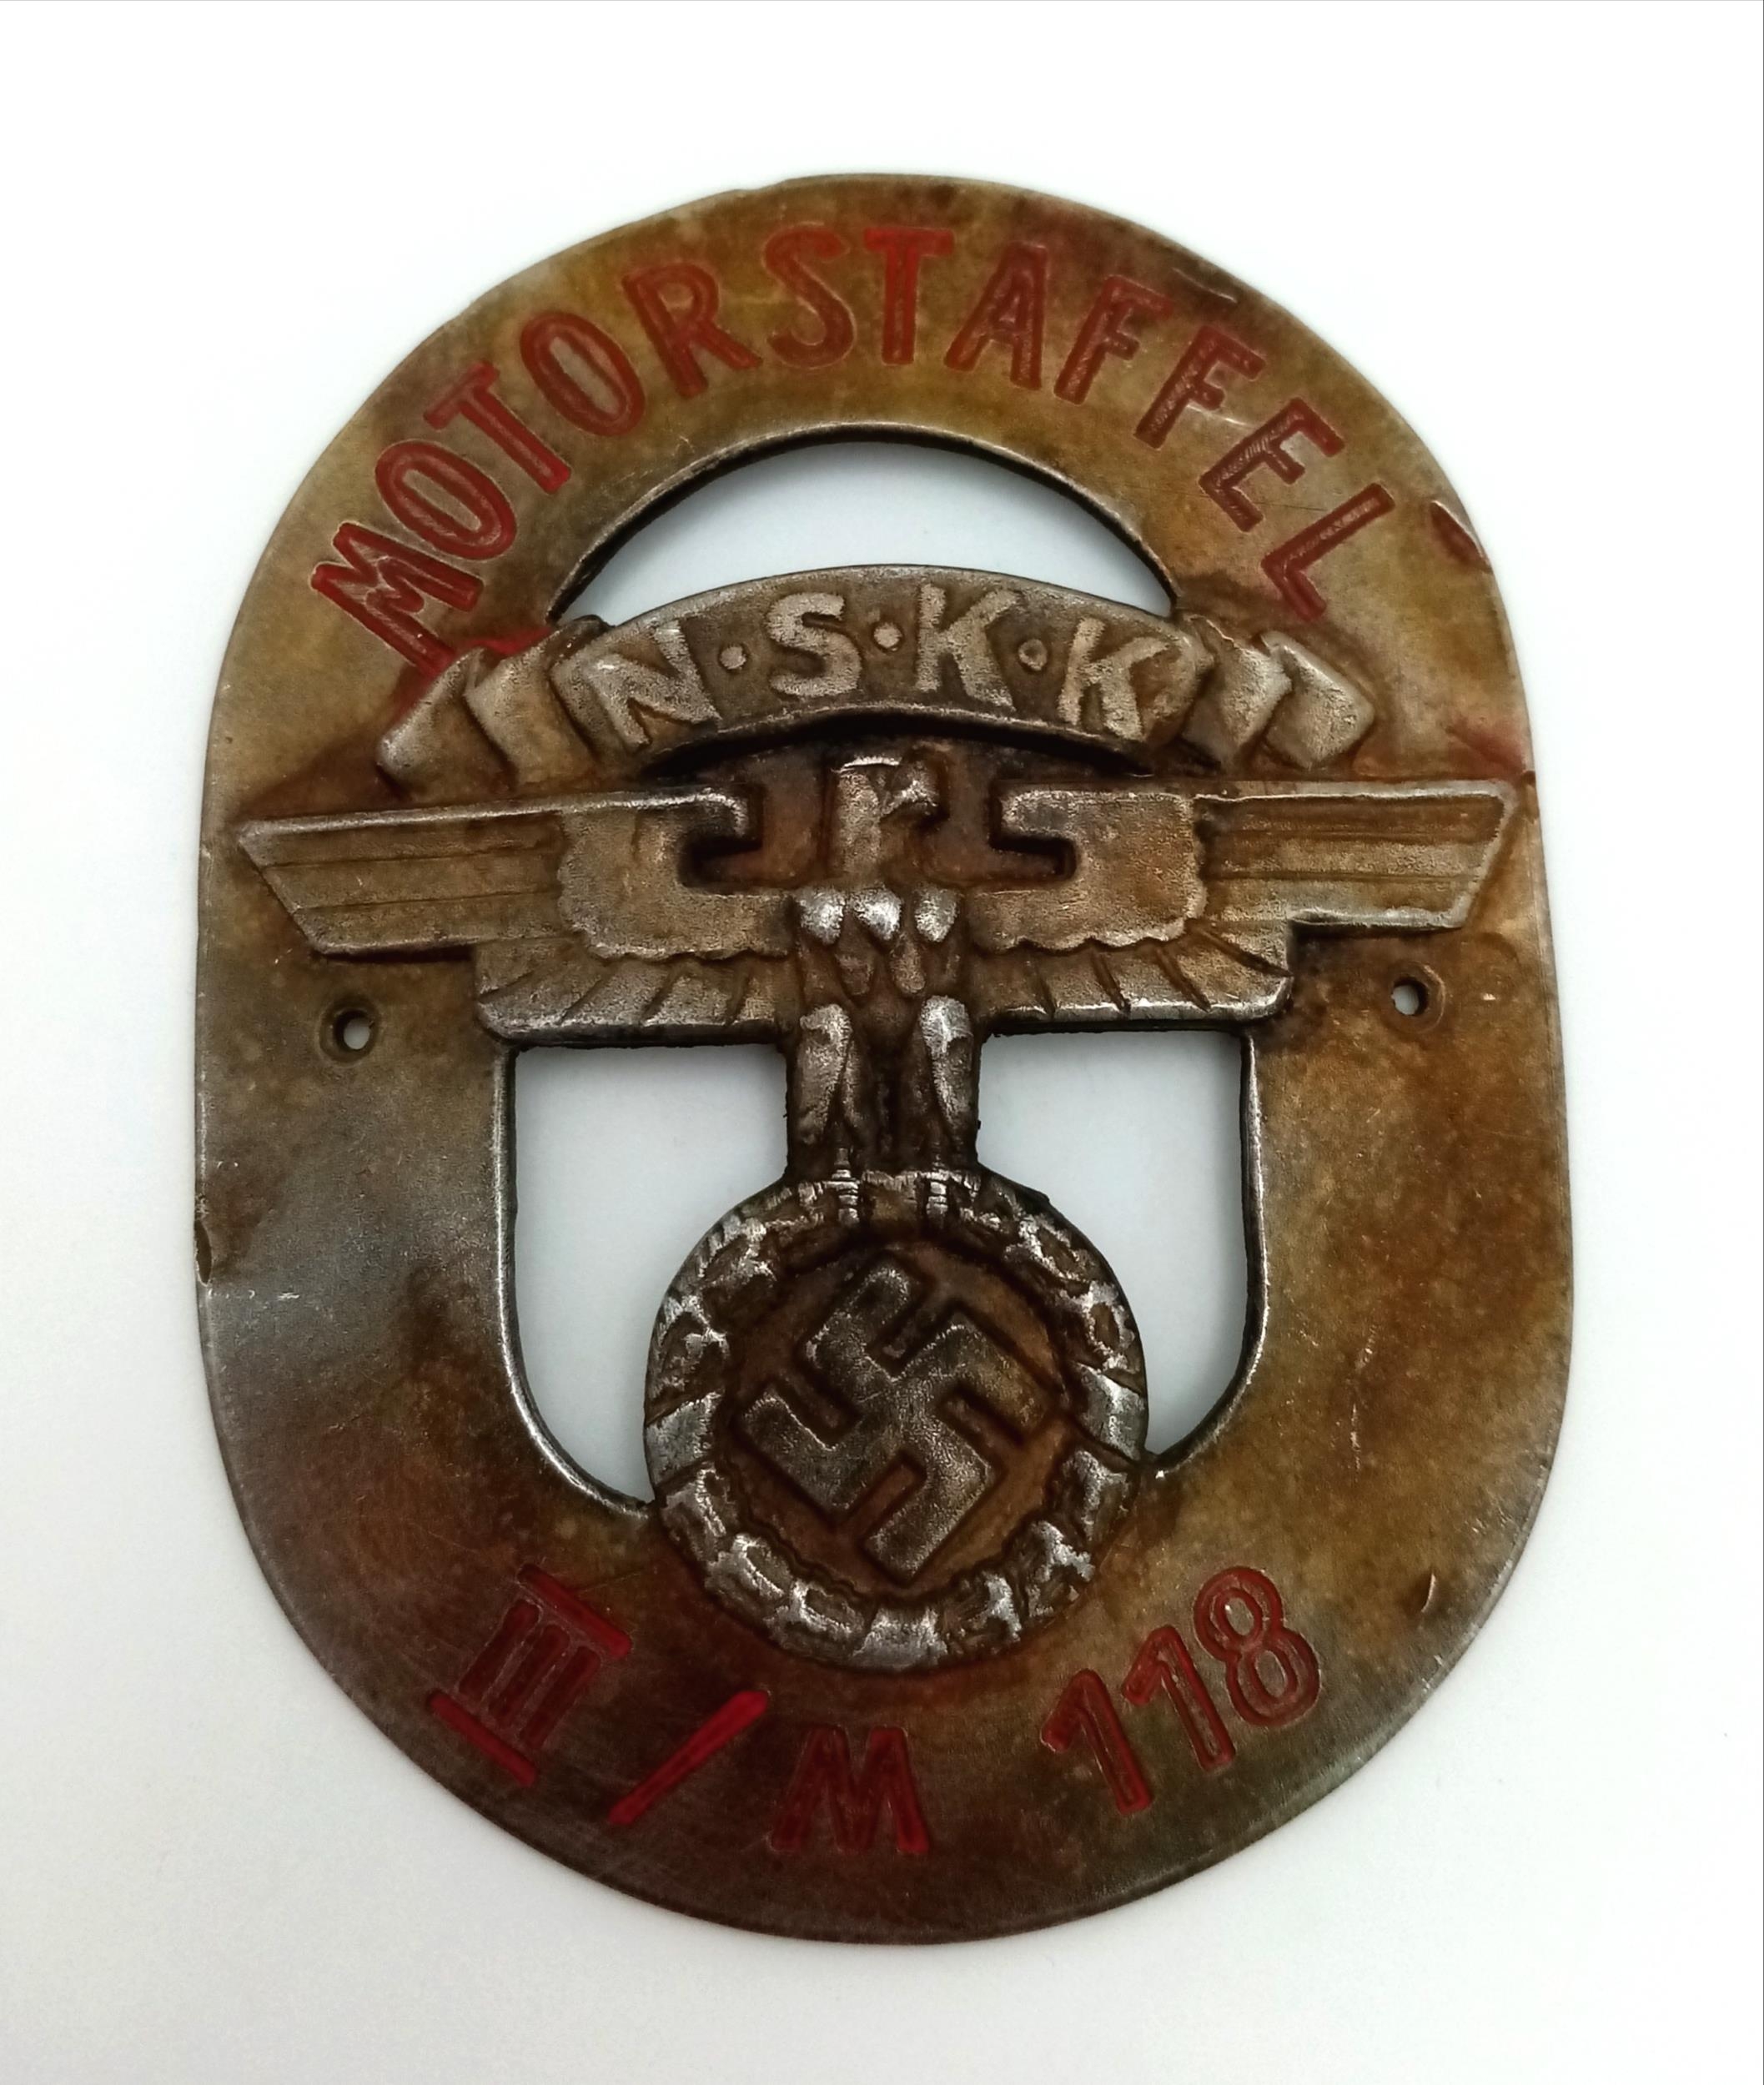 3rd Reich NSKK (Transport Corps) Unit 118 Motor Squadron Sleeve Badge.